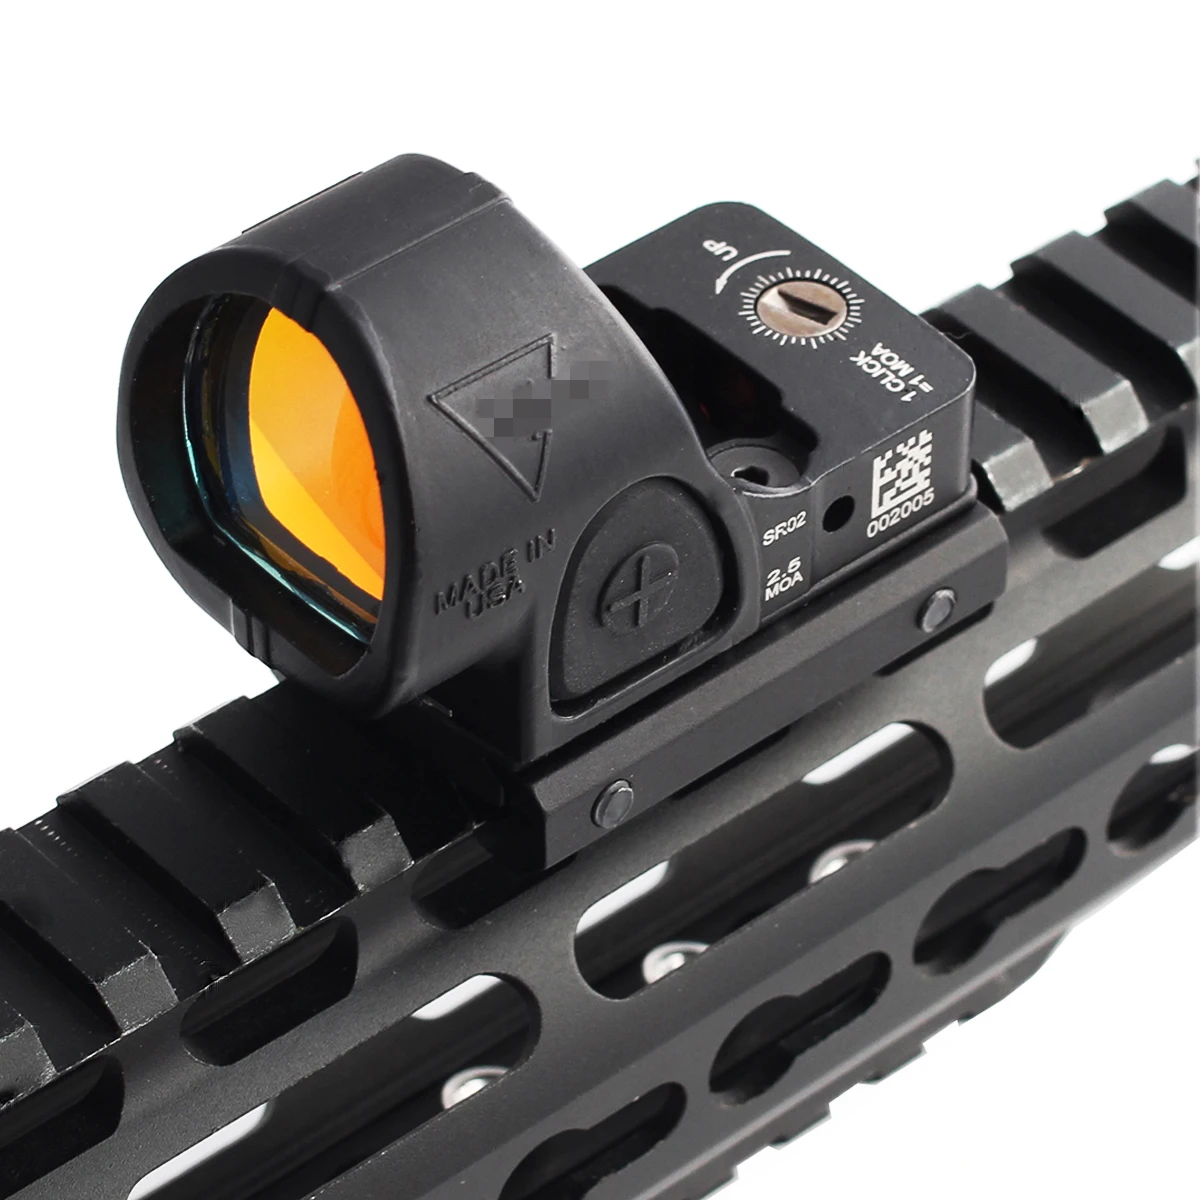 

SRO Mini RMR Red Dot Sight 2.5 moa Optic Reflex Sight Scope Collimator fits 20mm Weaver Rail For Glock Hunting Rifle Airsoft, Tan/black